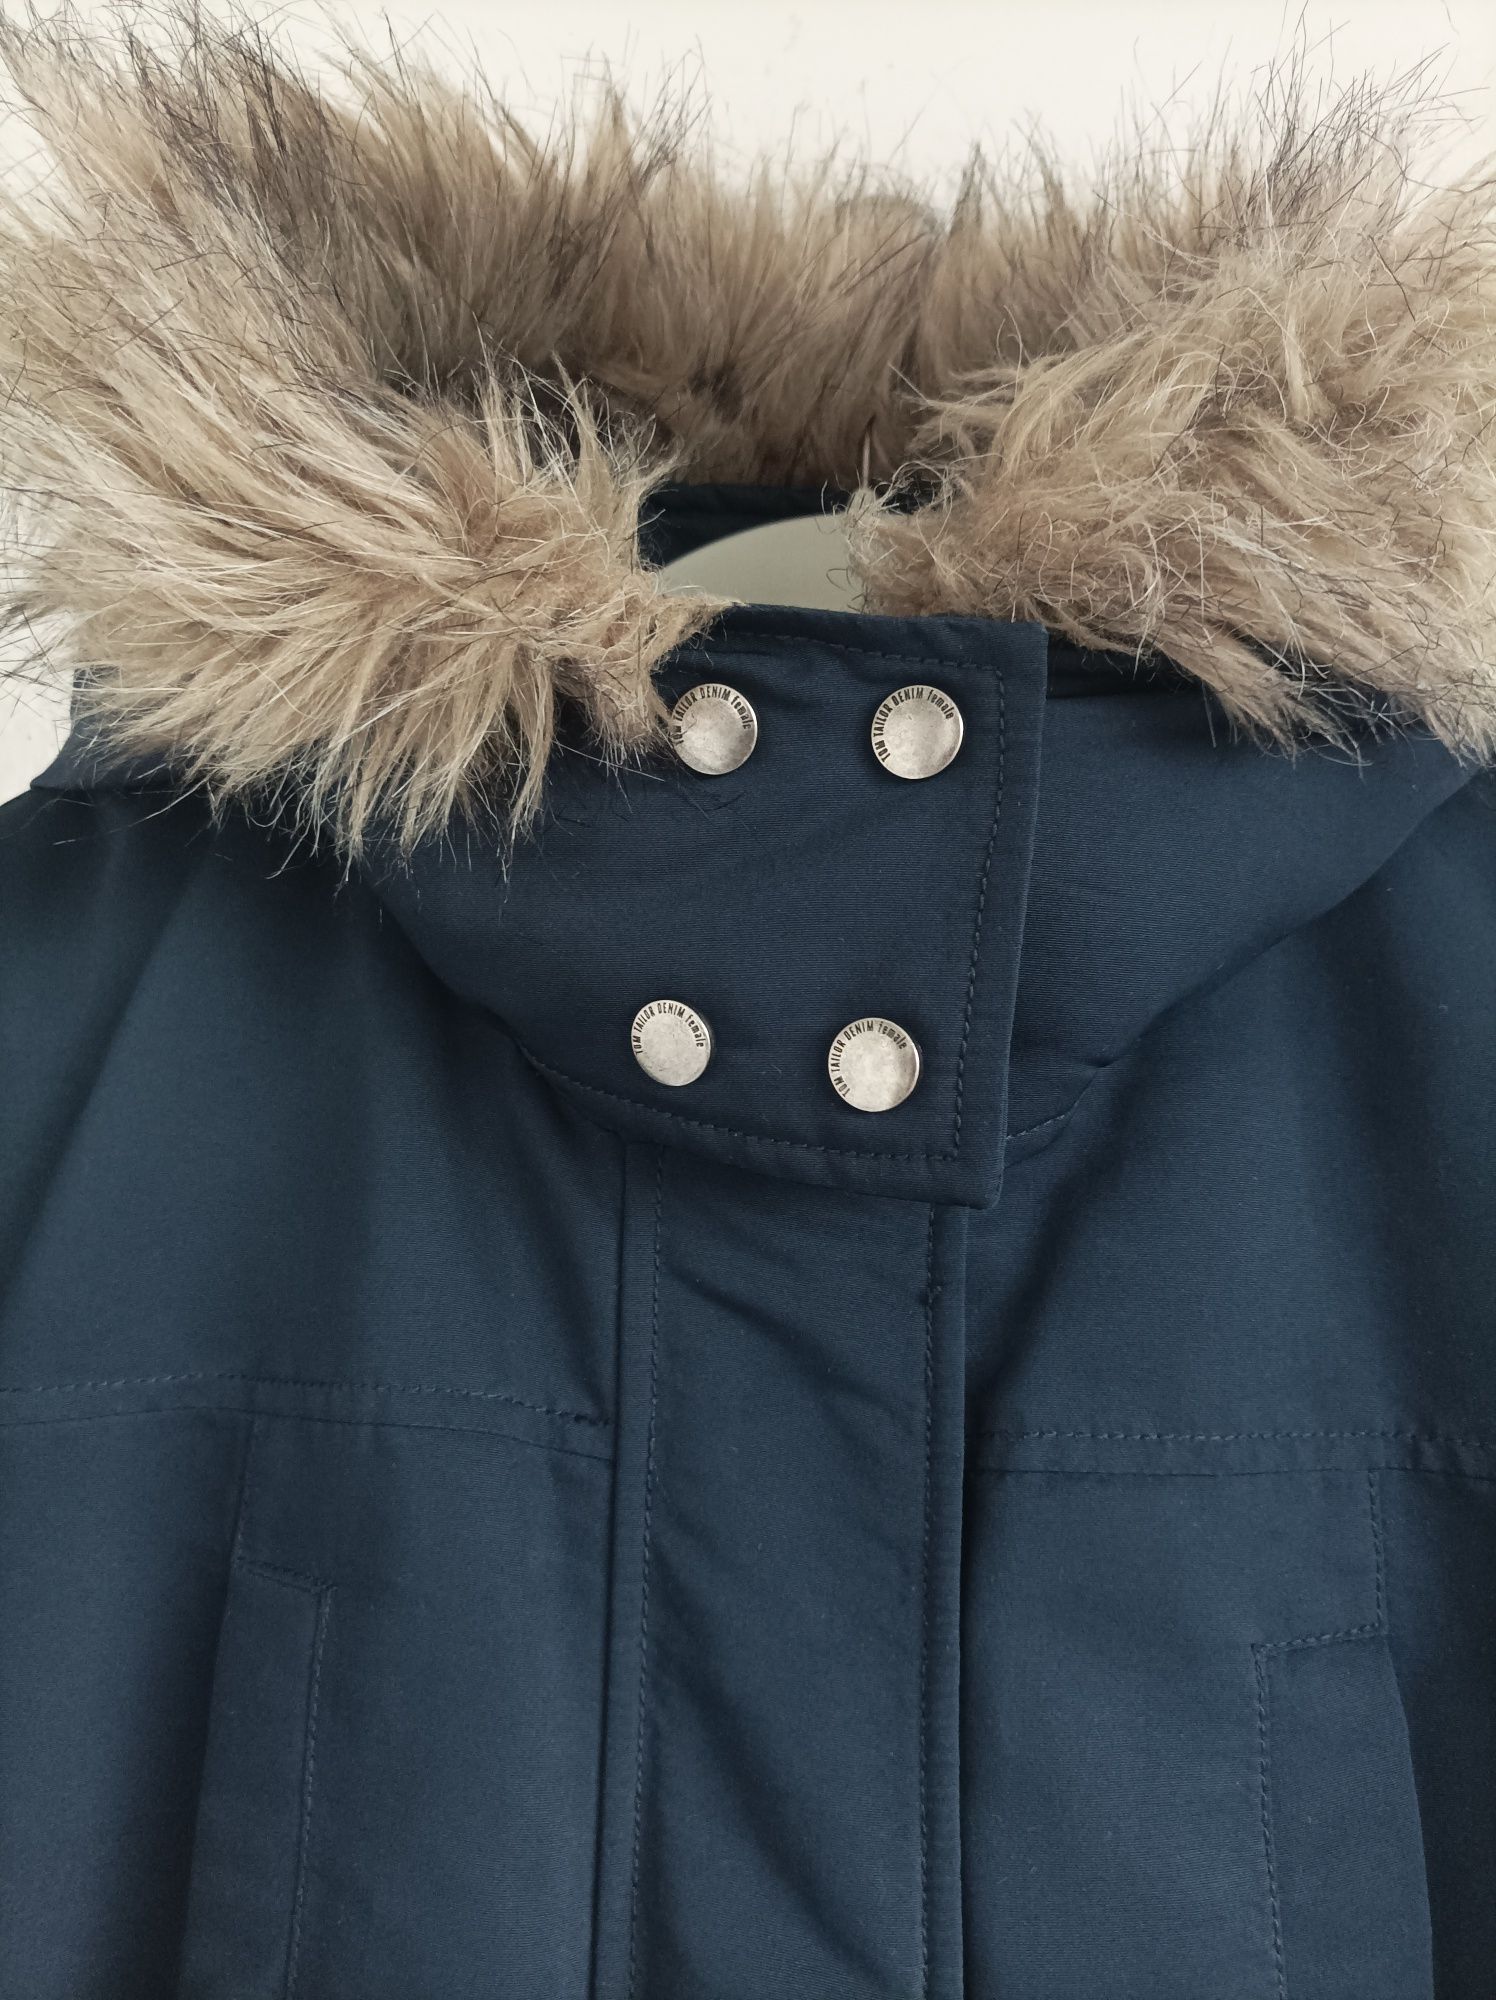 Зимняя термо куртка женская размер 44-46 М